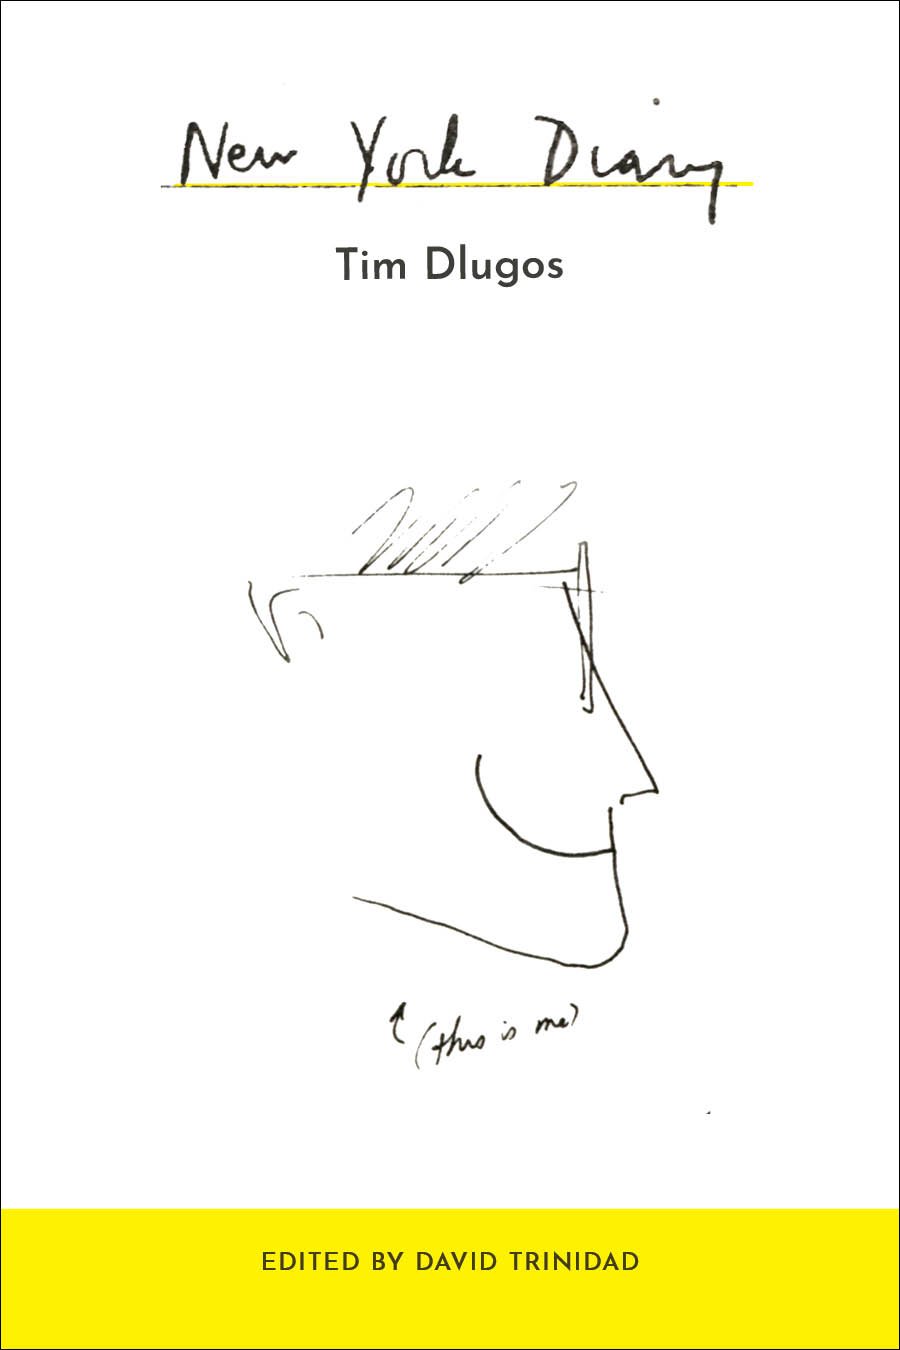 Image of New York Diary by Tim Dlugos, Edited by David Trinidad